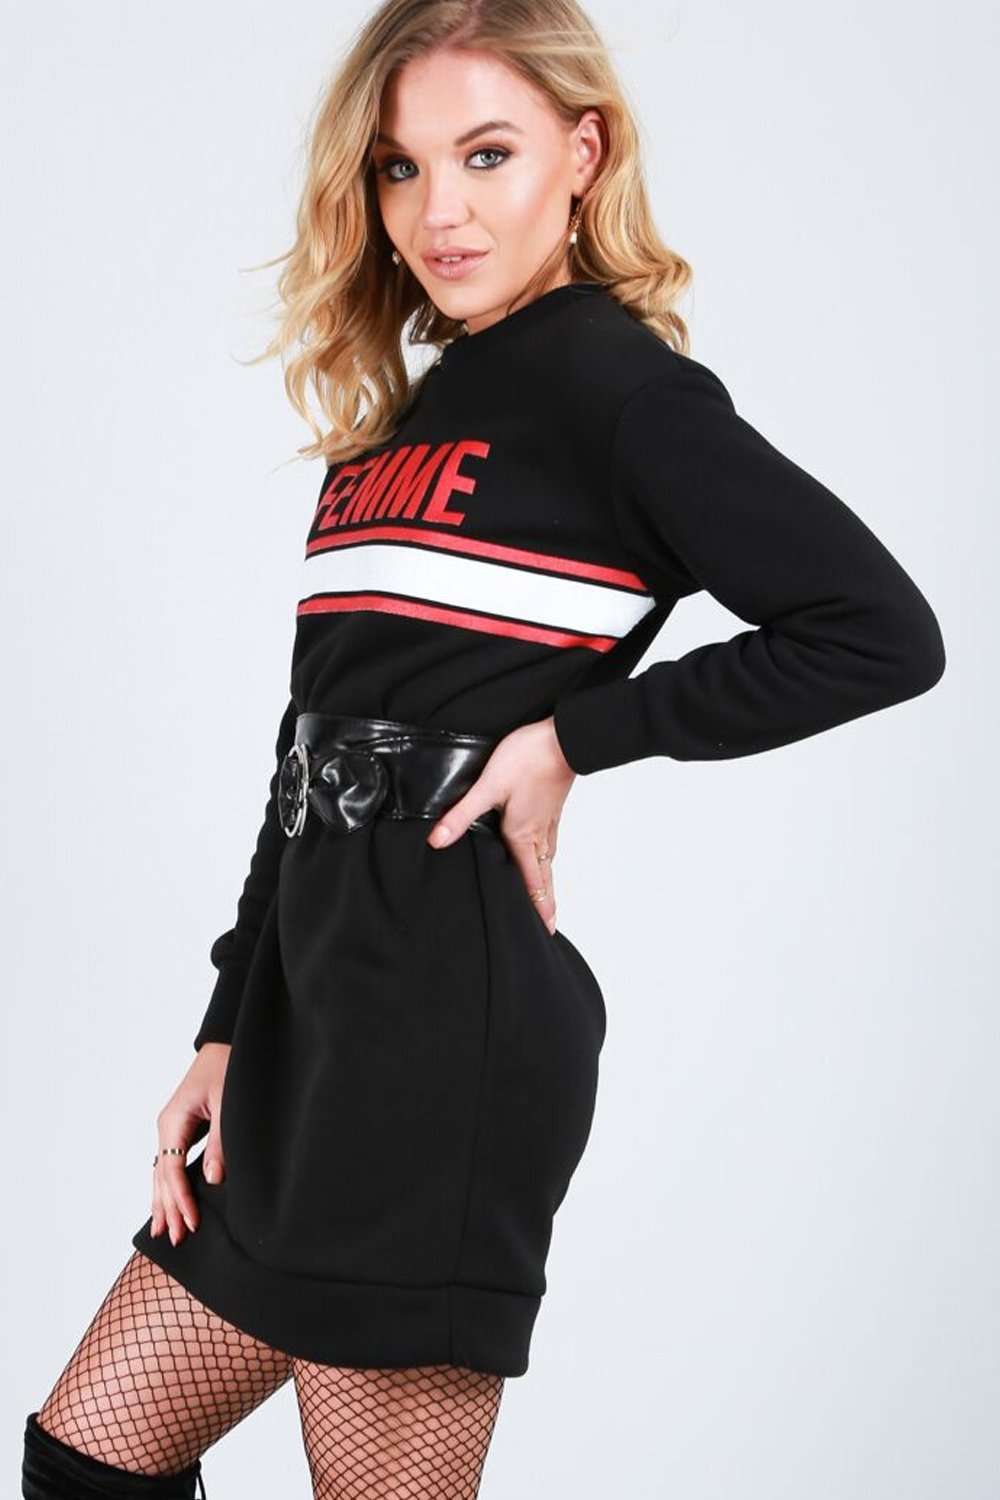 Miah Femme Slogan Print Sweatshirt Dress - bejealous-com